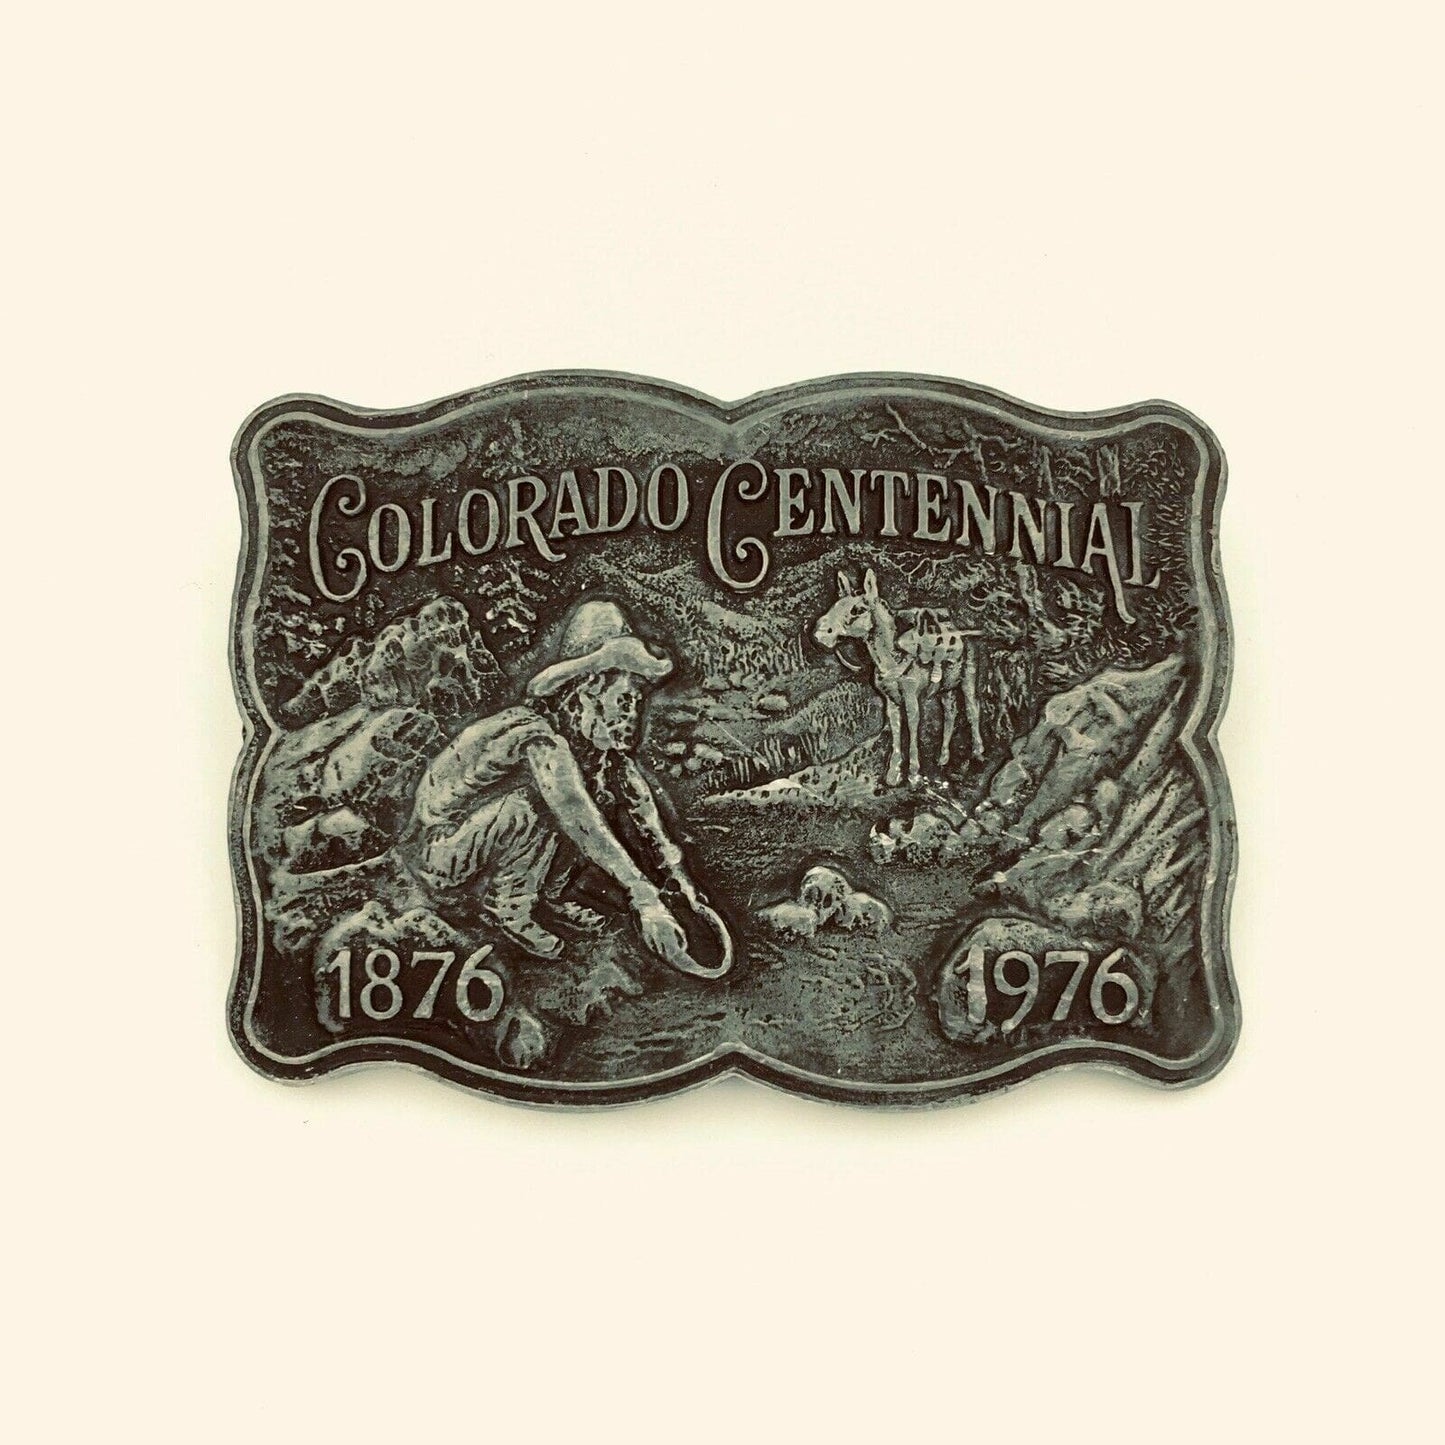 Vintage 1975 Colorado Centennial 1876 - 1976 James Lind Belt Buckle USA